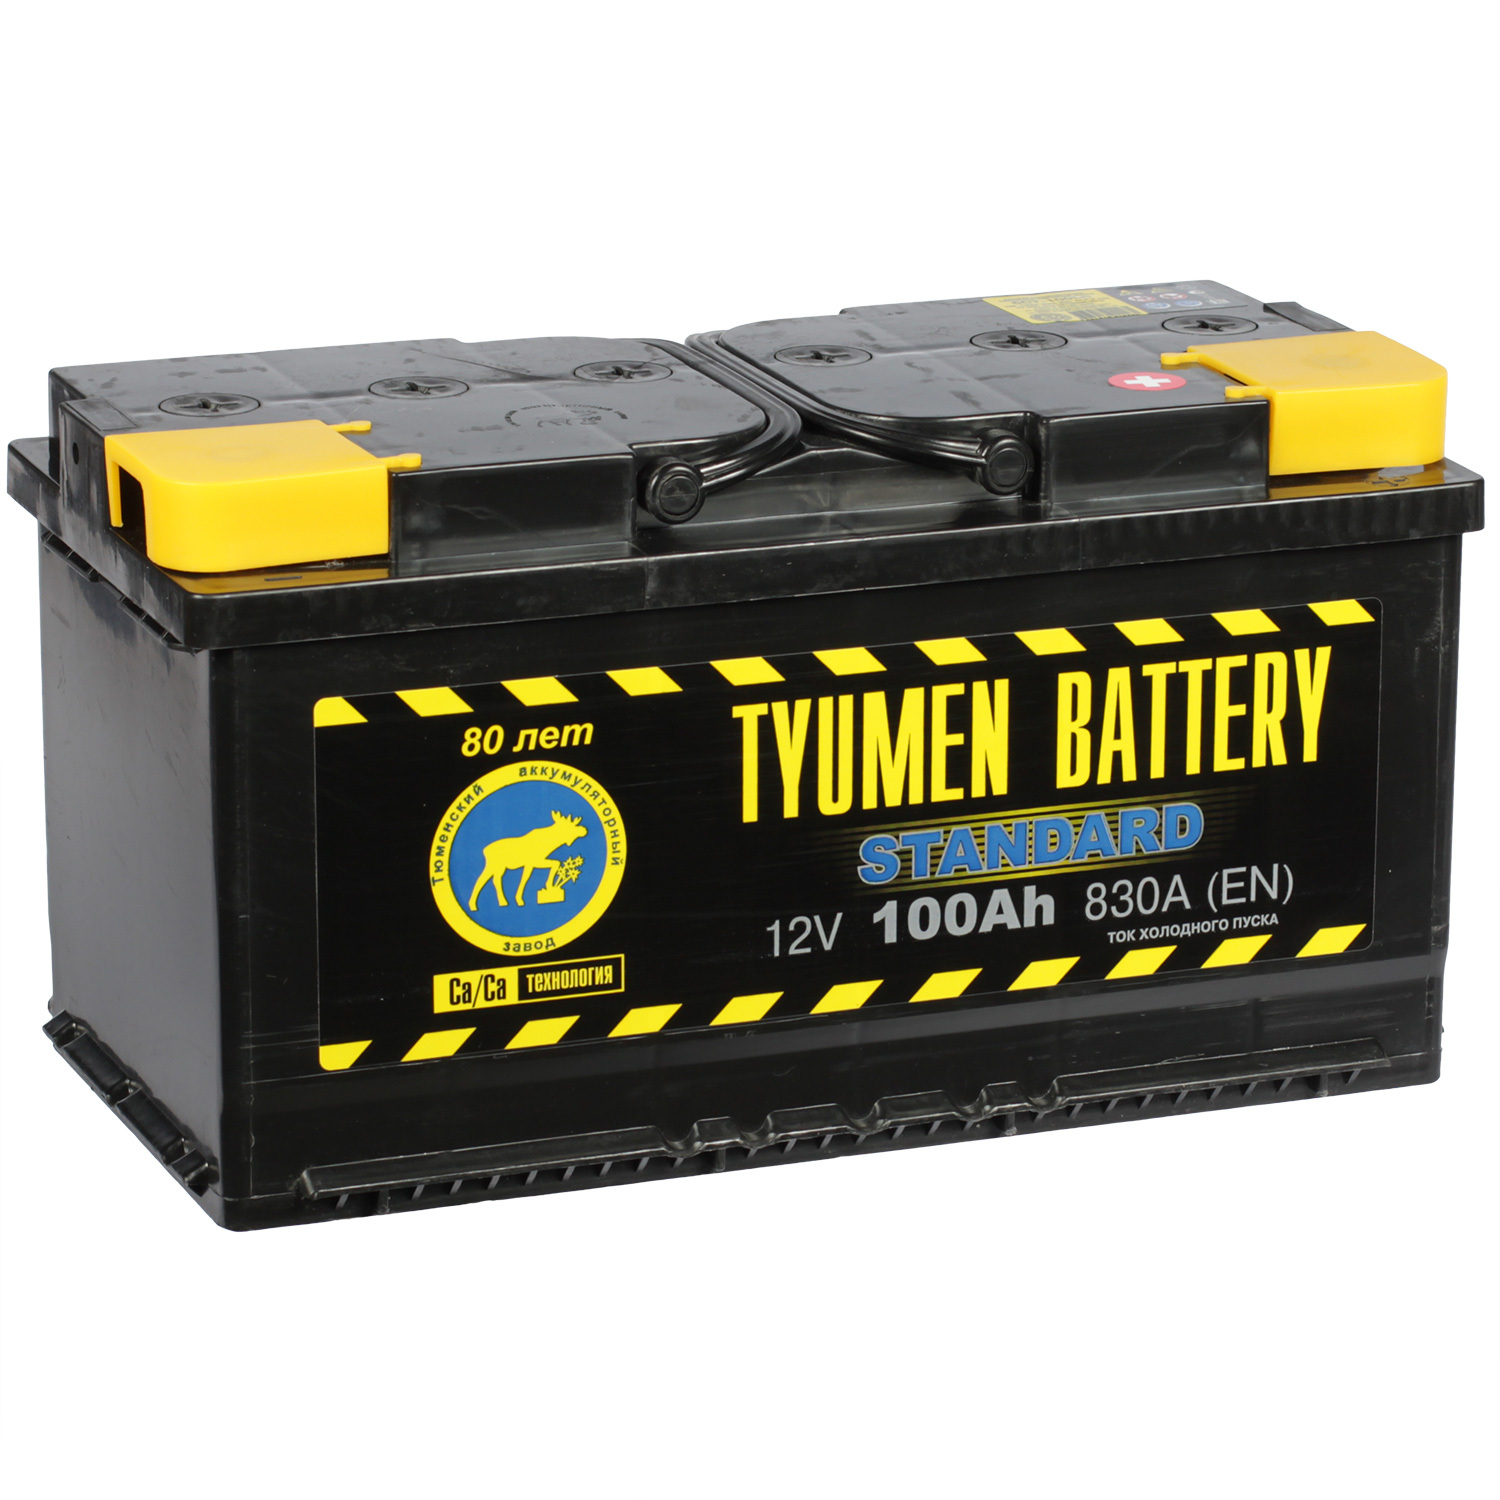 Tyumen Battery Автомобильный аккумулятор Tyumen Battery Standard 100 Ач обратная полярность L5 tyumen battery автомобильный аккумулятор tyumen battery standard 60 ач прямая полярность l2